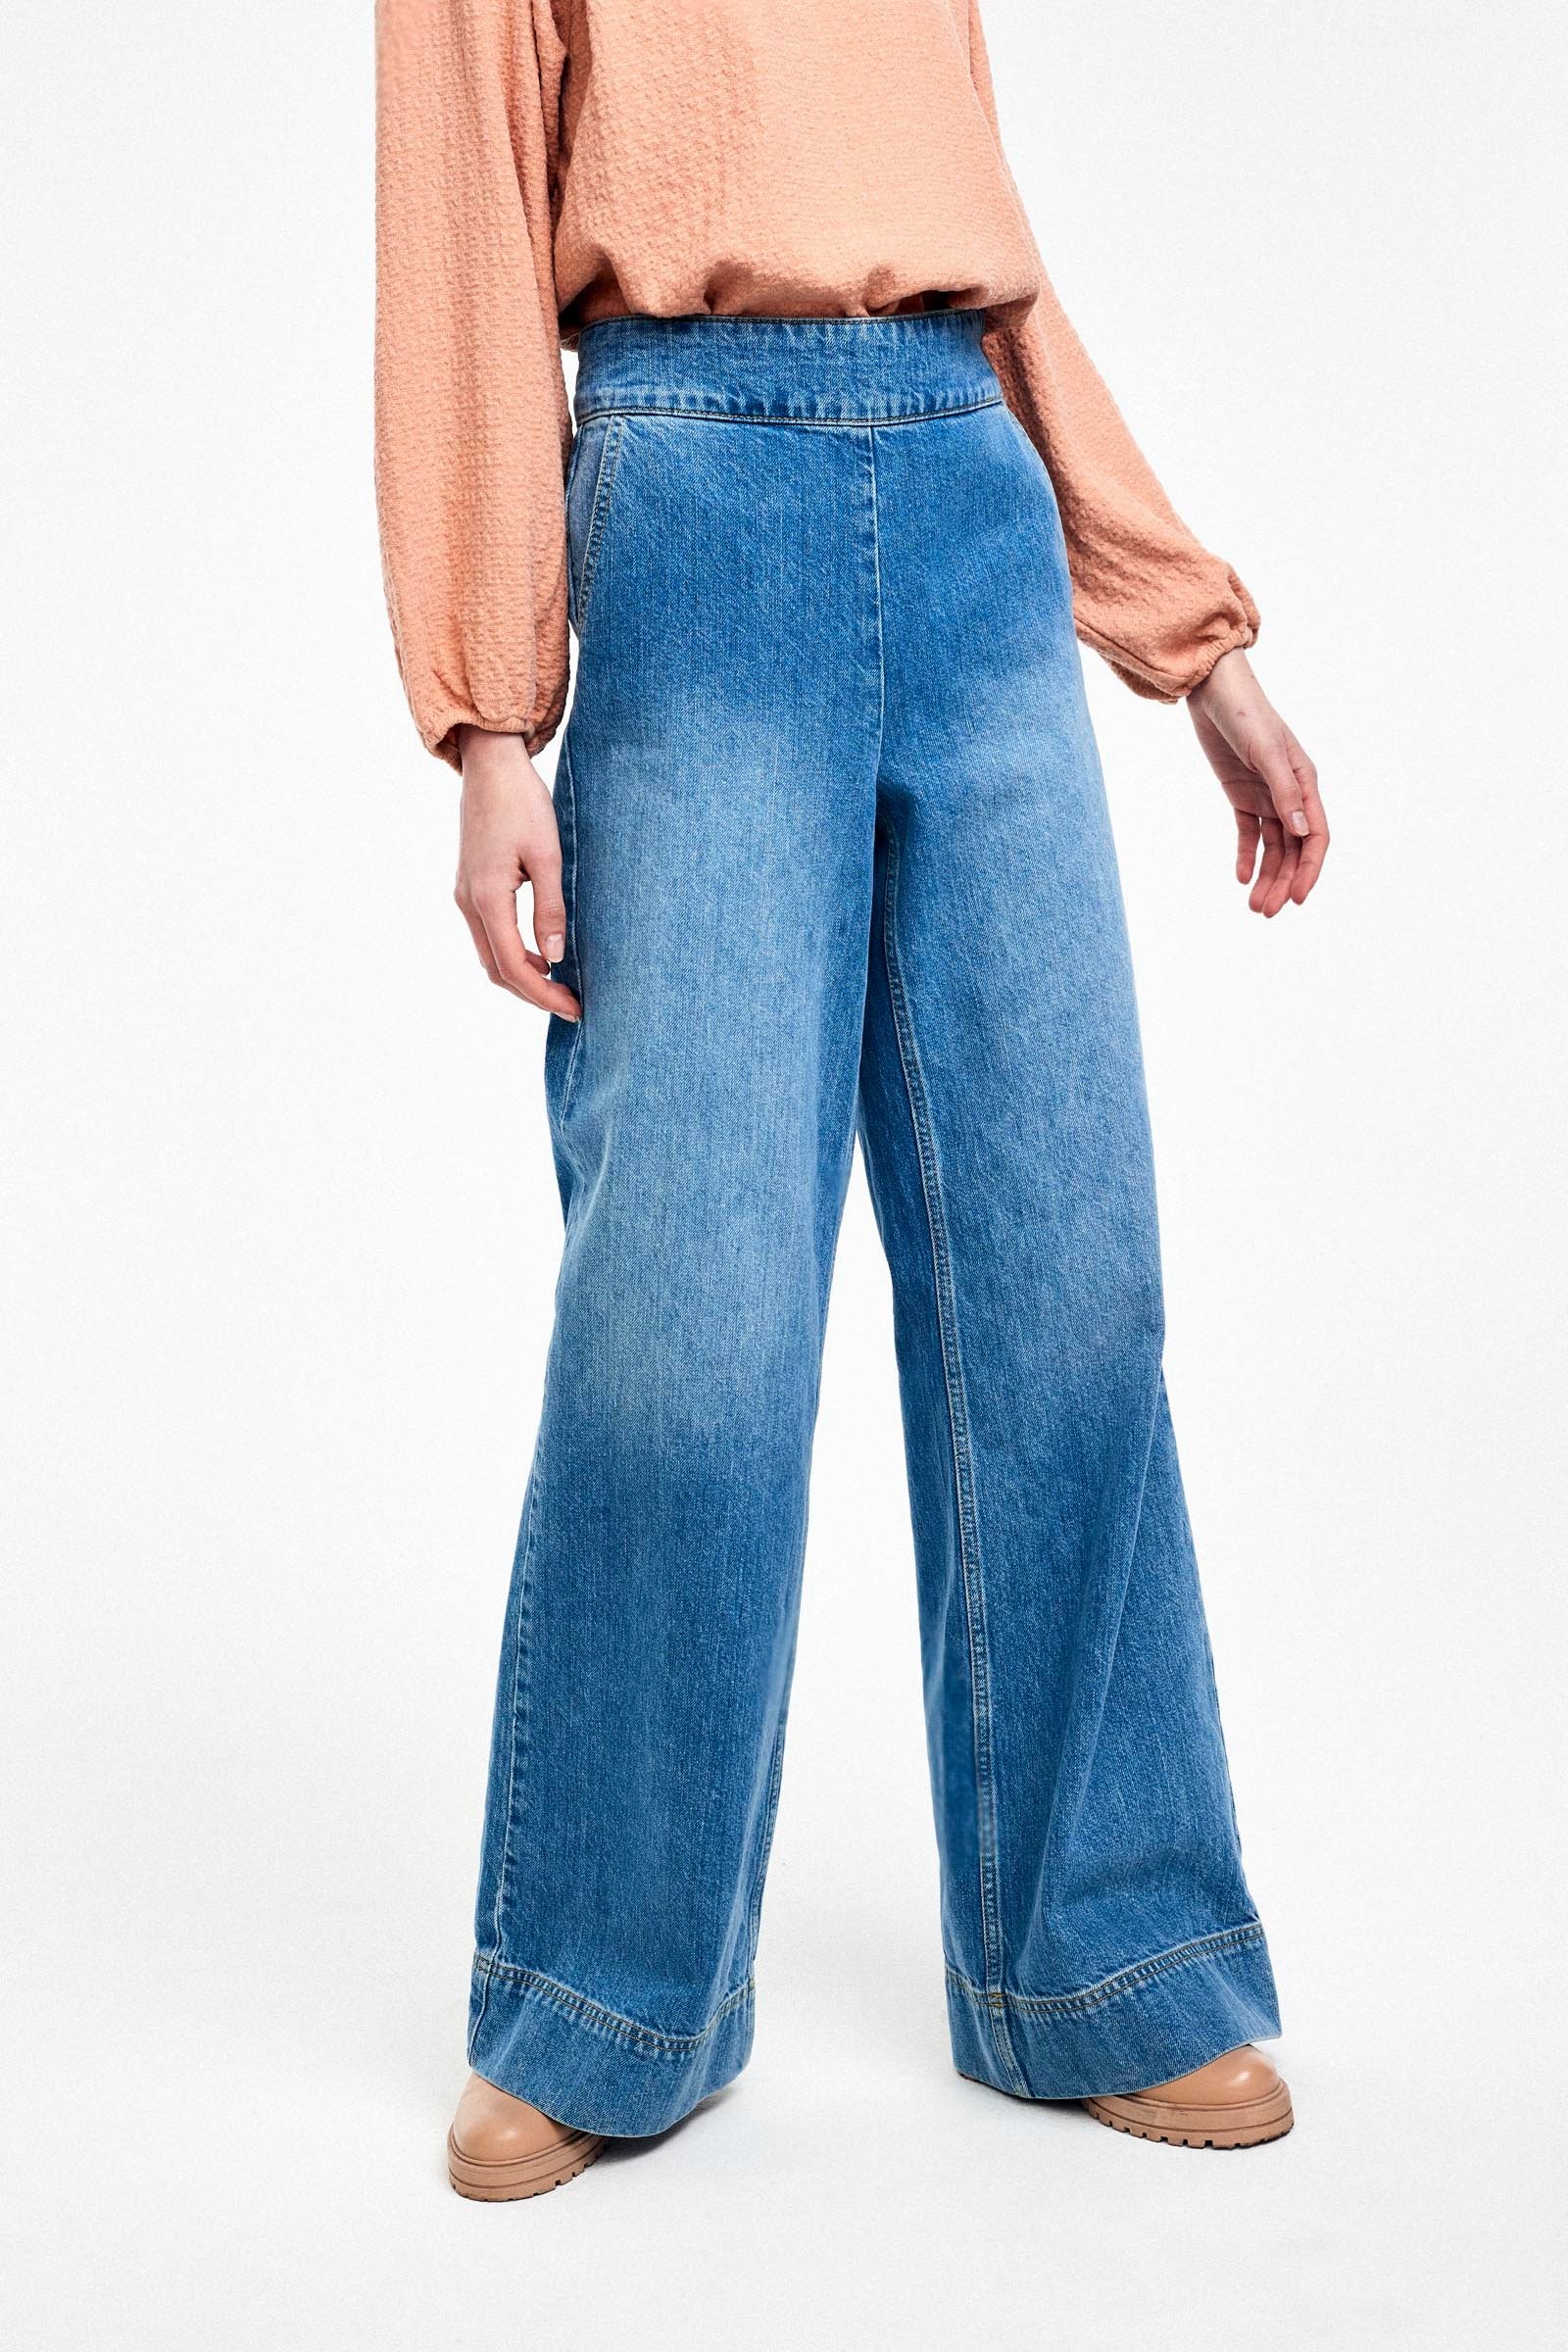 CKS Dames - TAIFOS - lange jeans - blauw